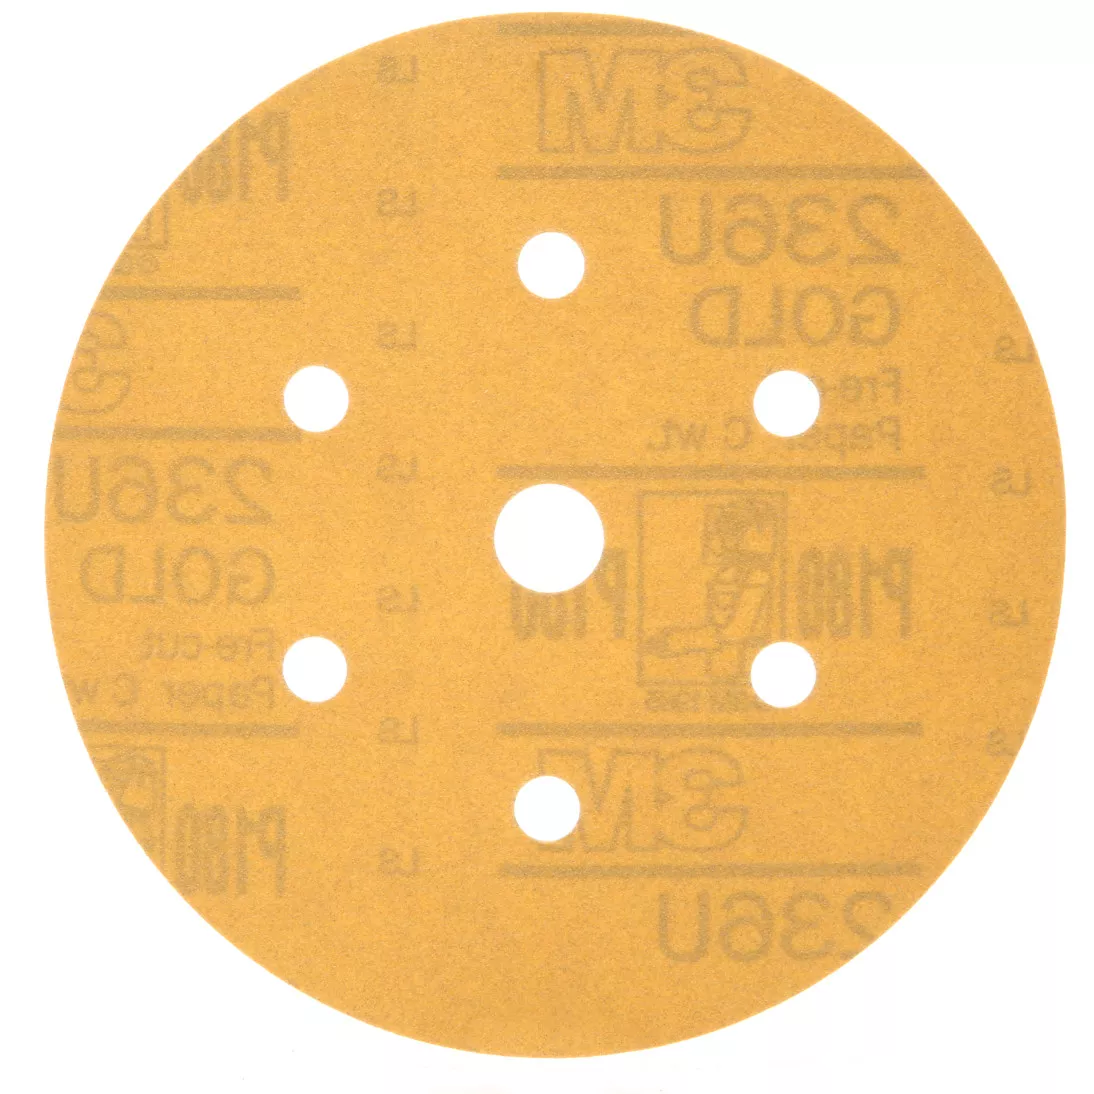 3M™ Hookit™ Gold Disc Dust Free 236U, 01079, 6 in, P180, 100 discs per
carton, 4 cartons per case